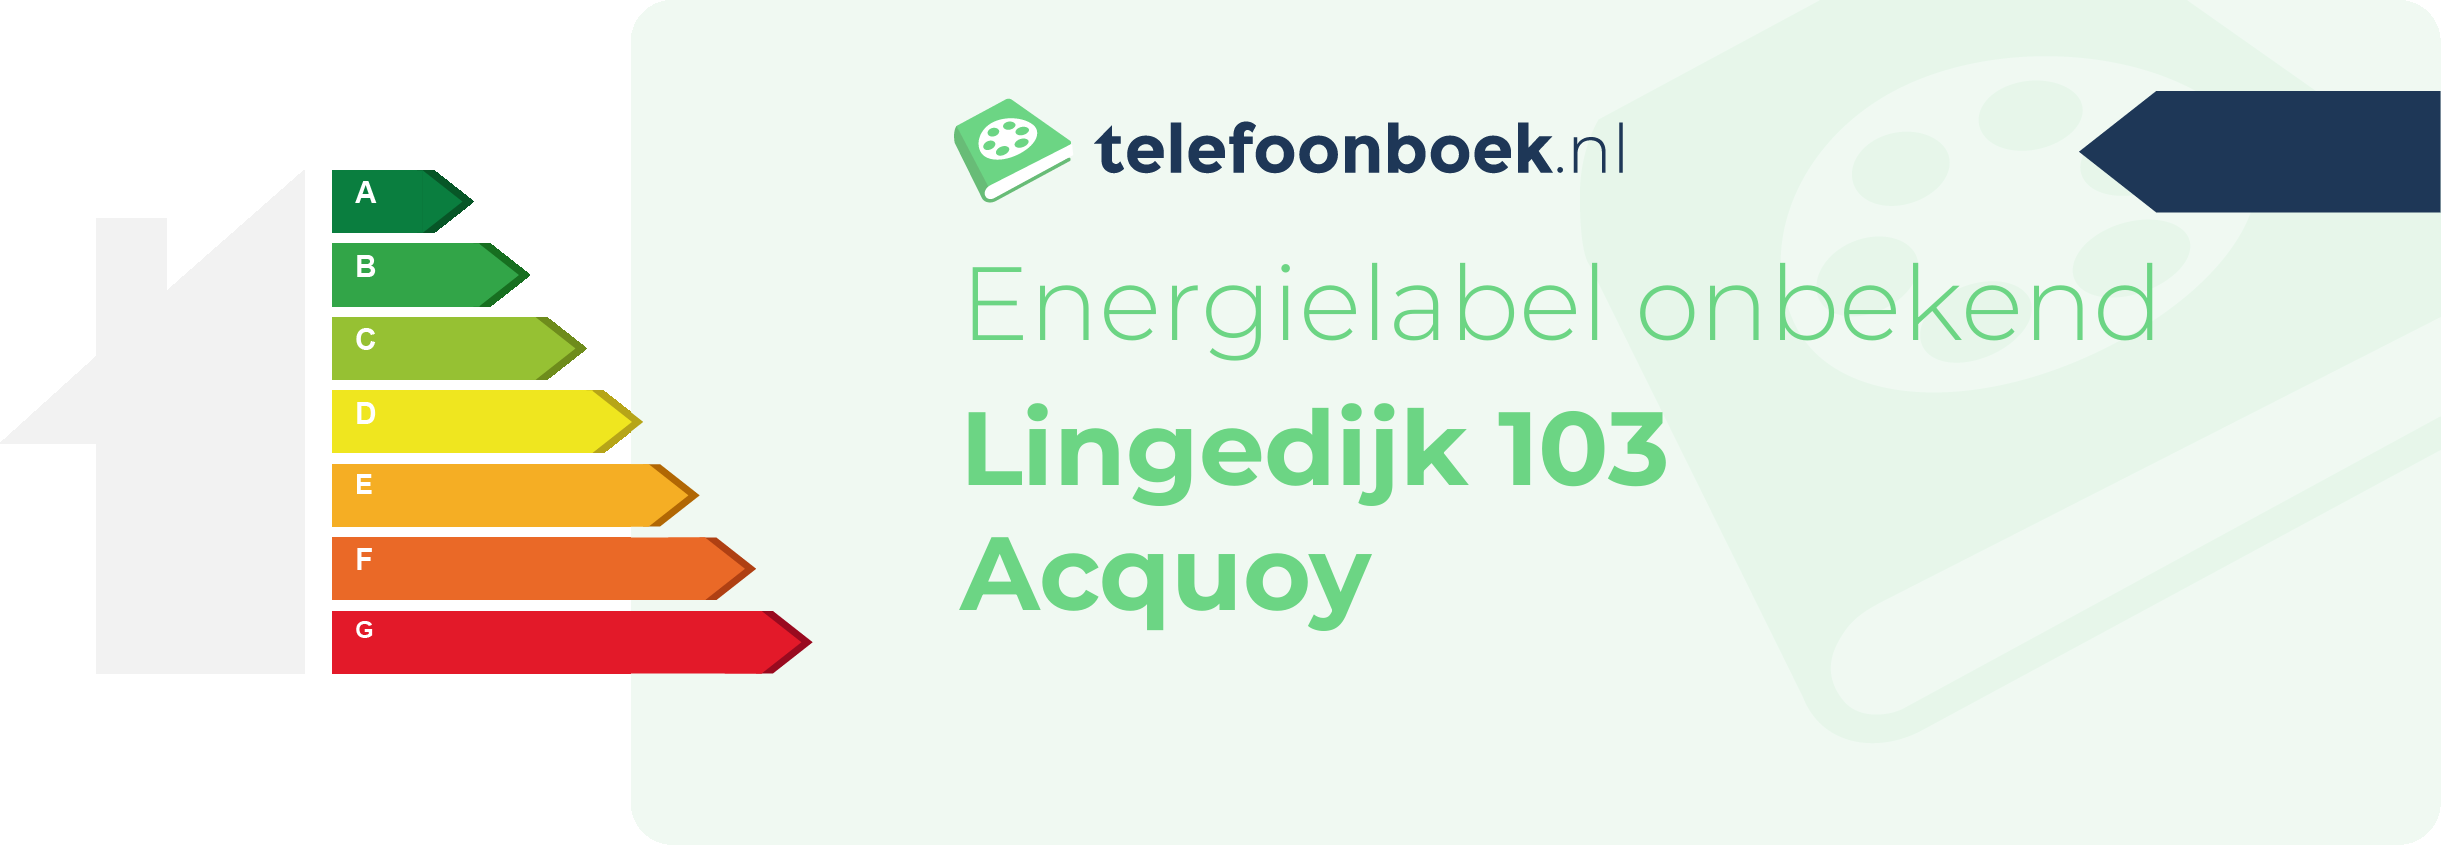 Energielabel Lingedijk 103 Acquoy